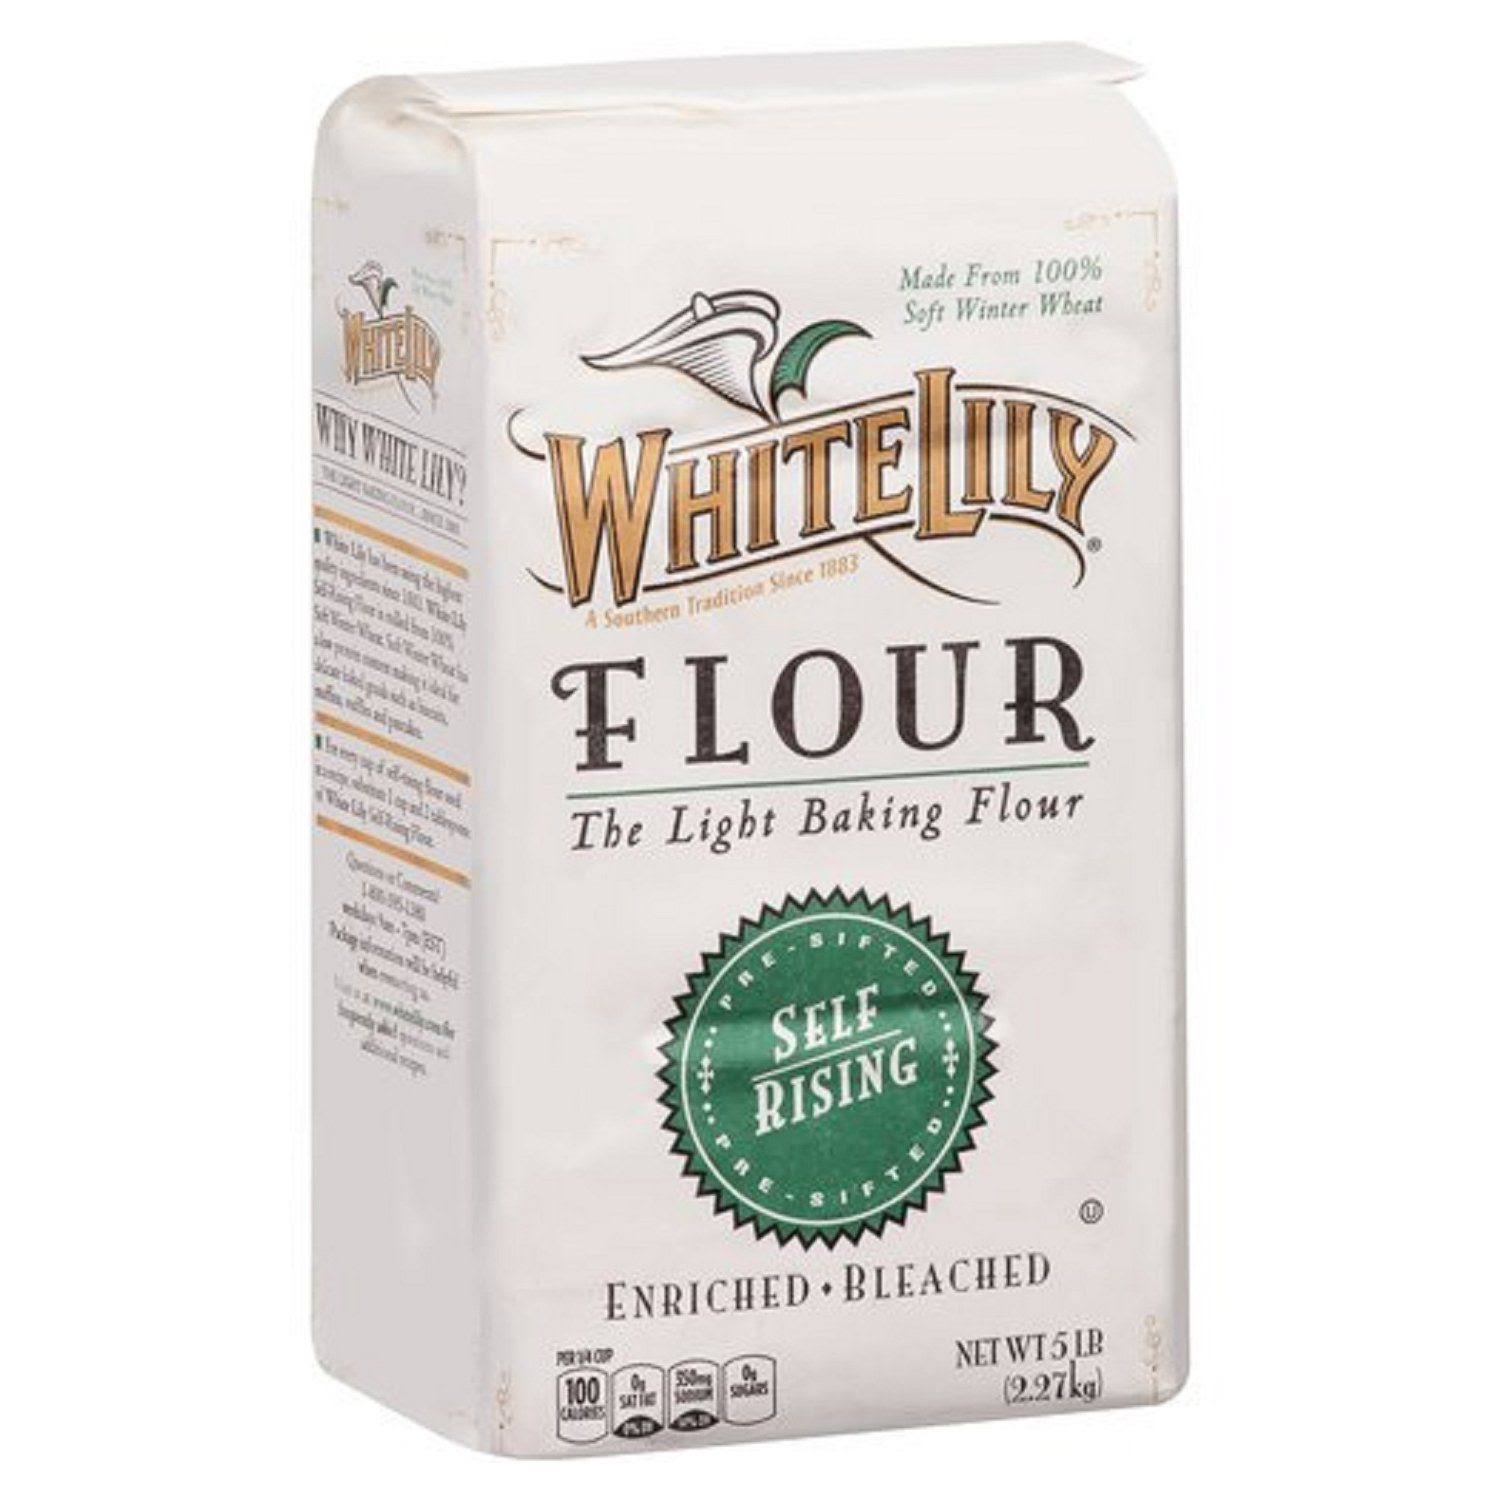 White Lily Wheat Flours Meals Self Rising Bleached Flour - 80oz